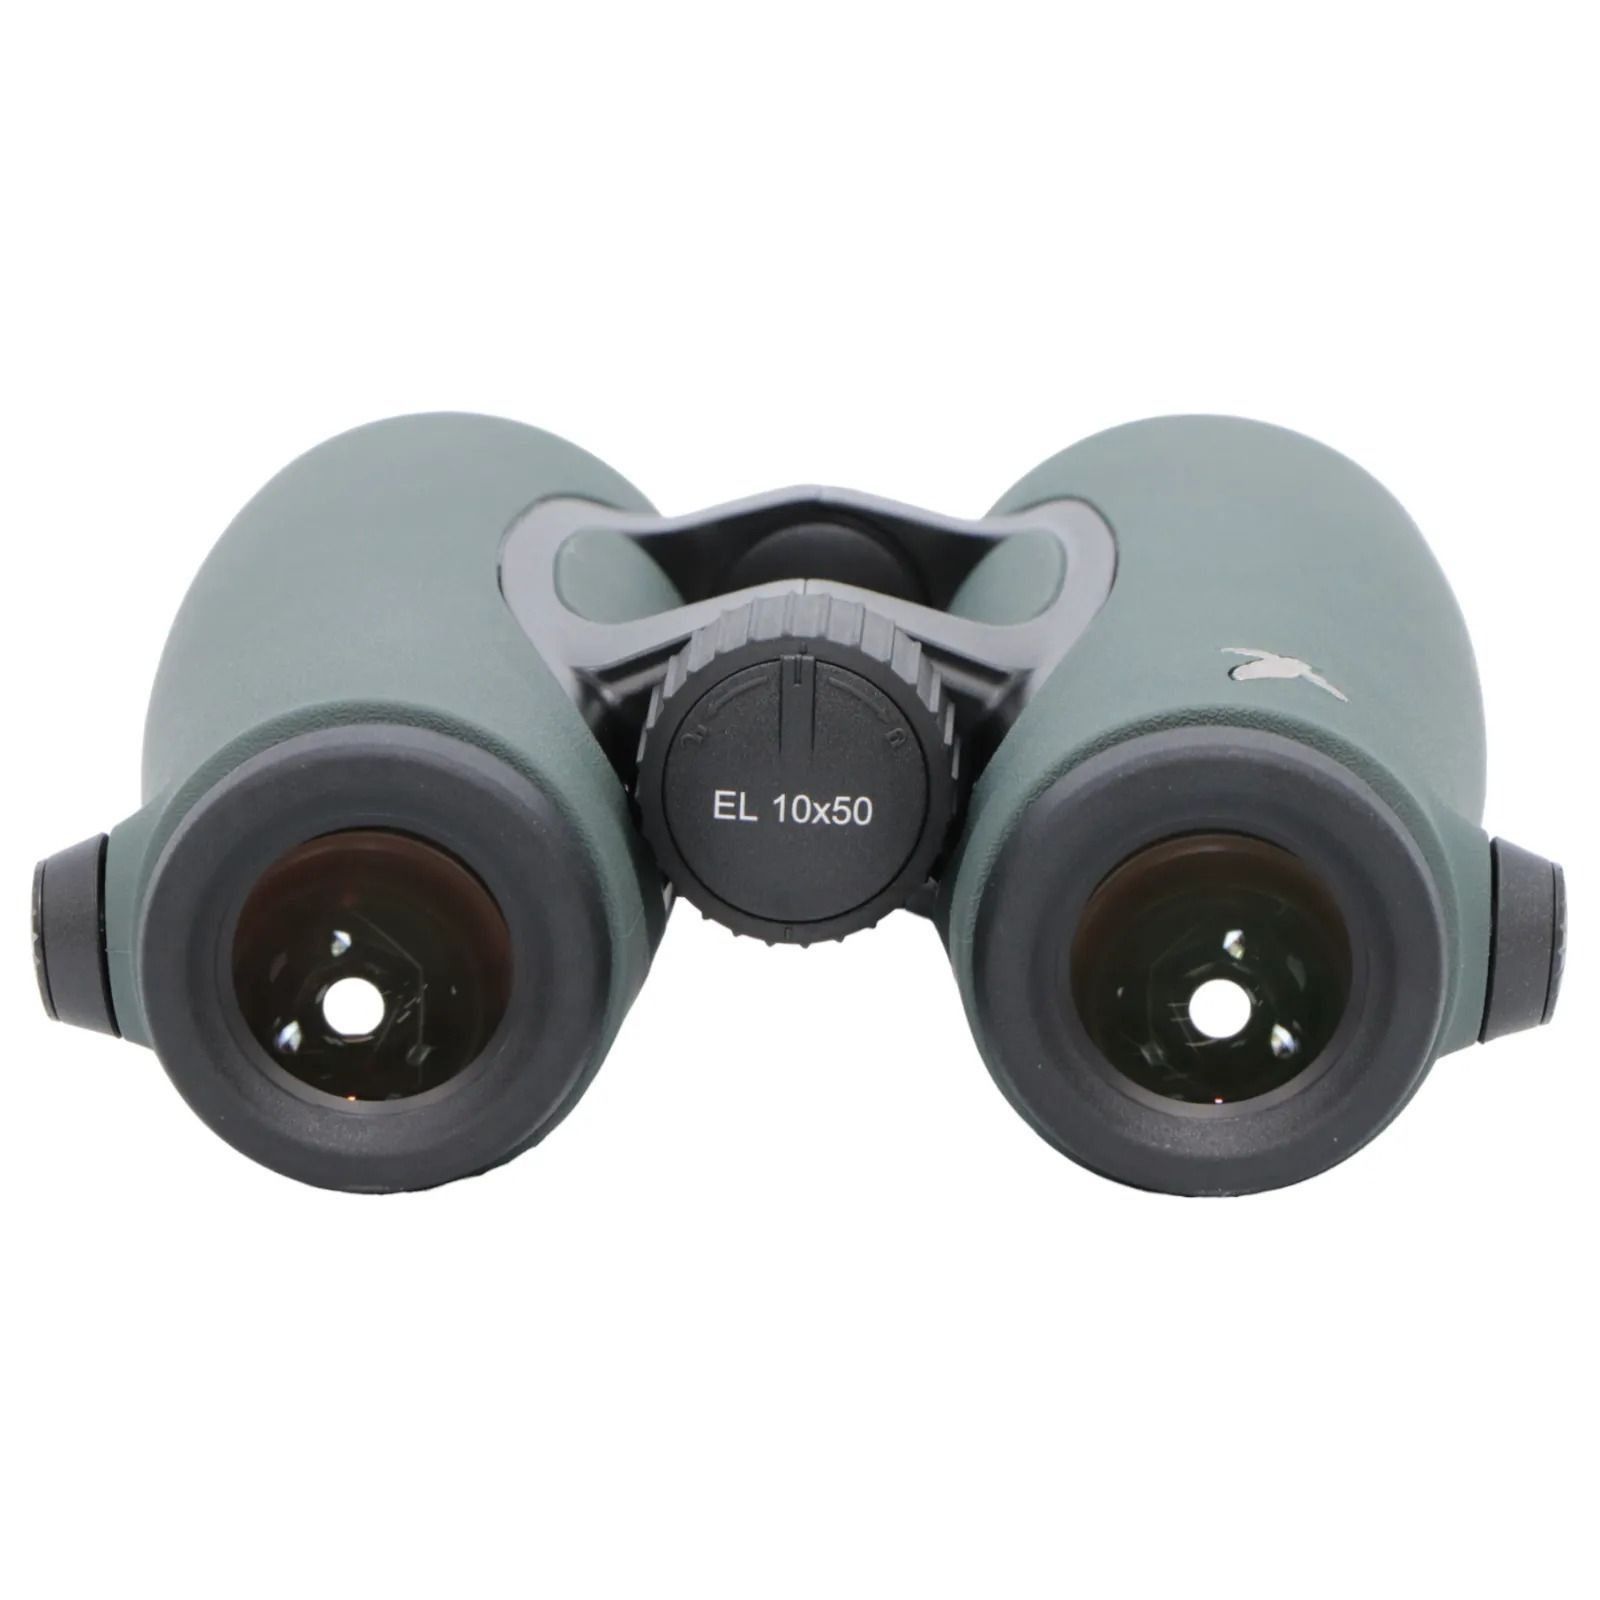 SWAROVSKI (スワロフスキー) 防水機能付き双眼鏡 EL 10×50SV WB